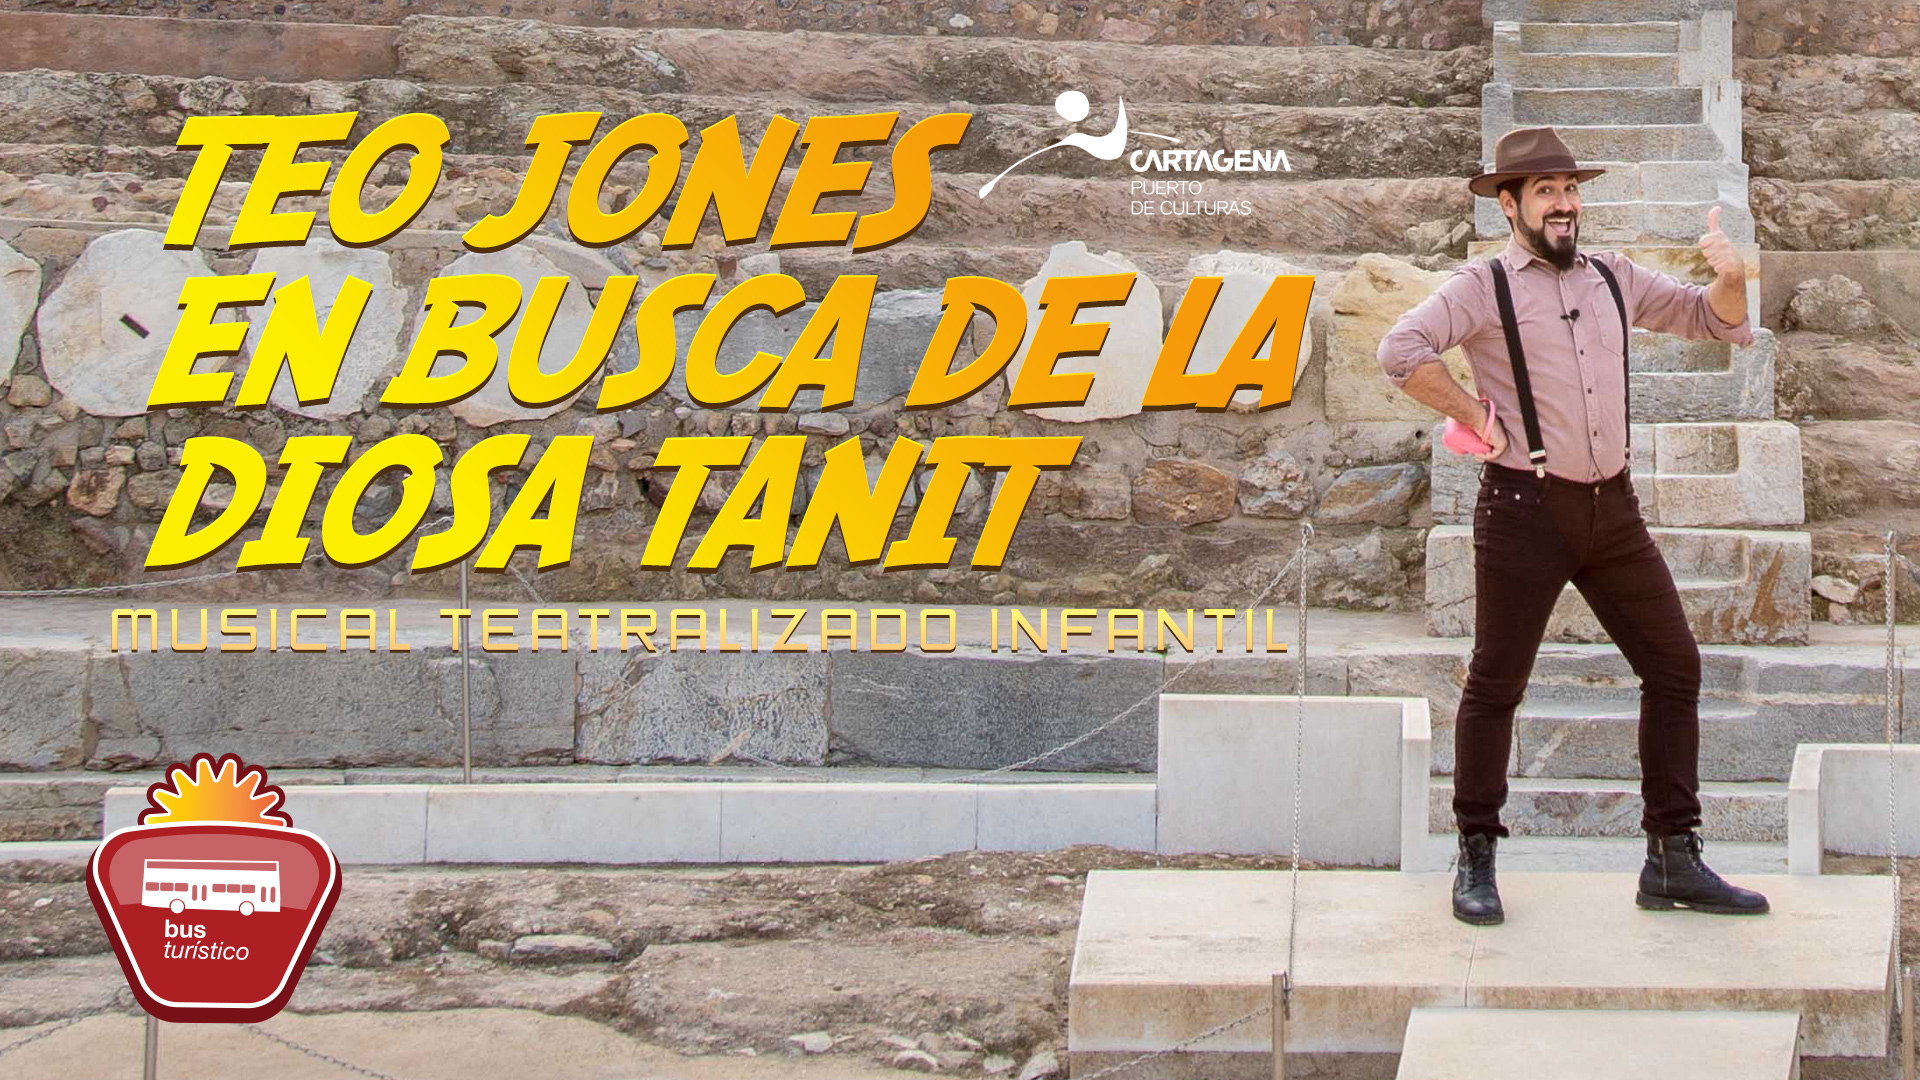 'TEO JONES EN BUSCA DE LA DIOSA TANIT'. Musical teatralizado infantil